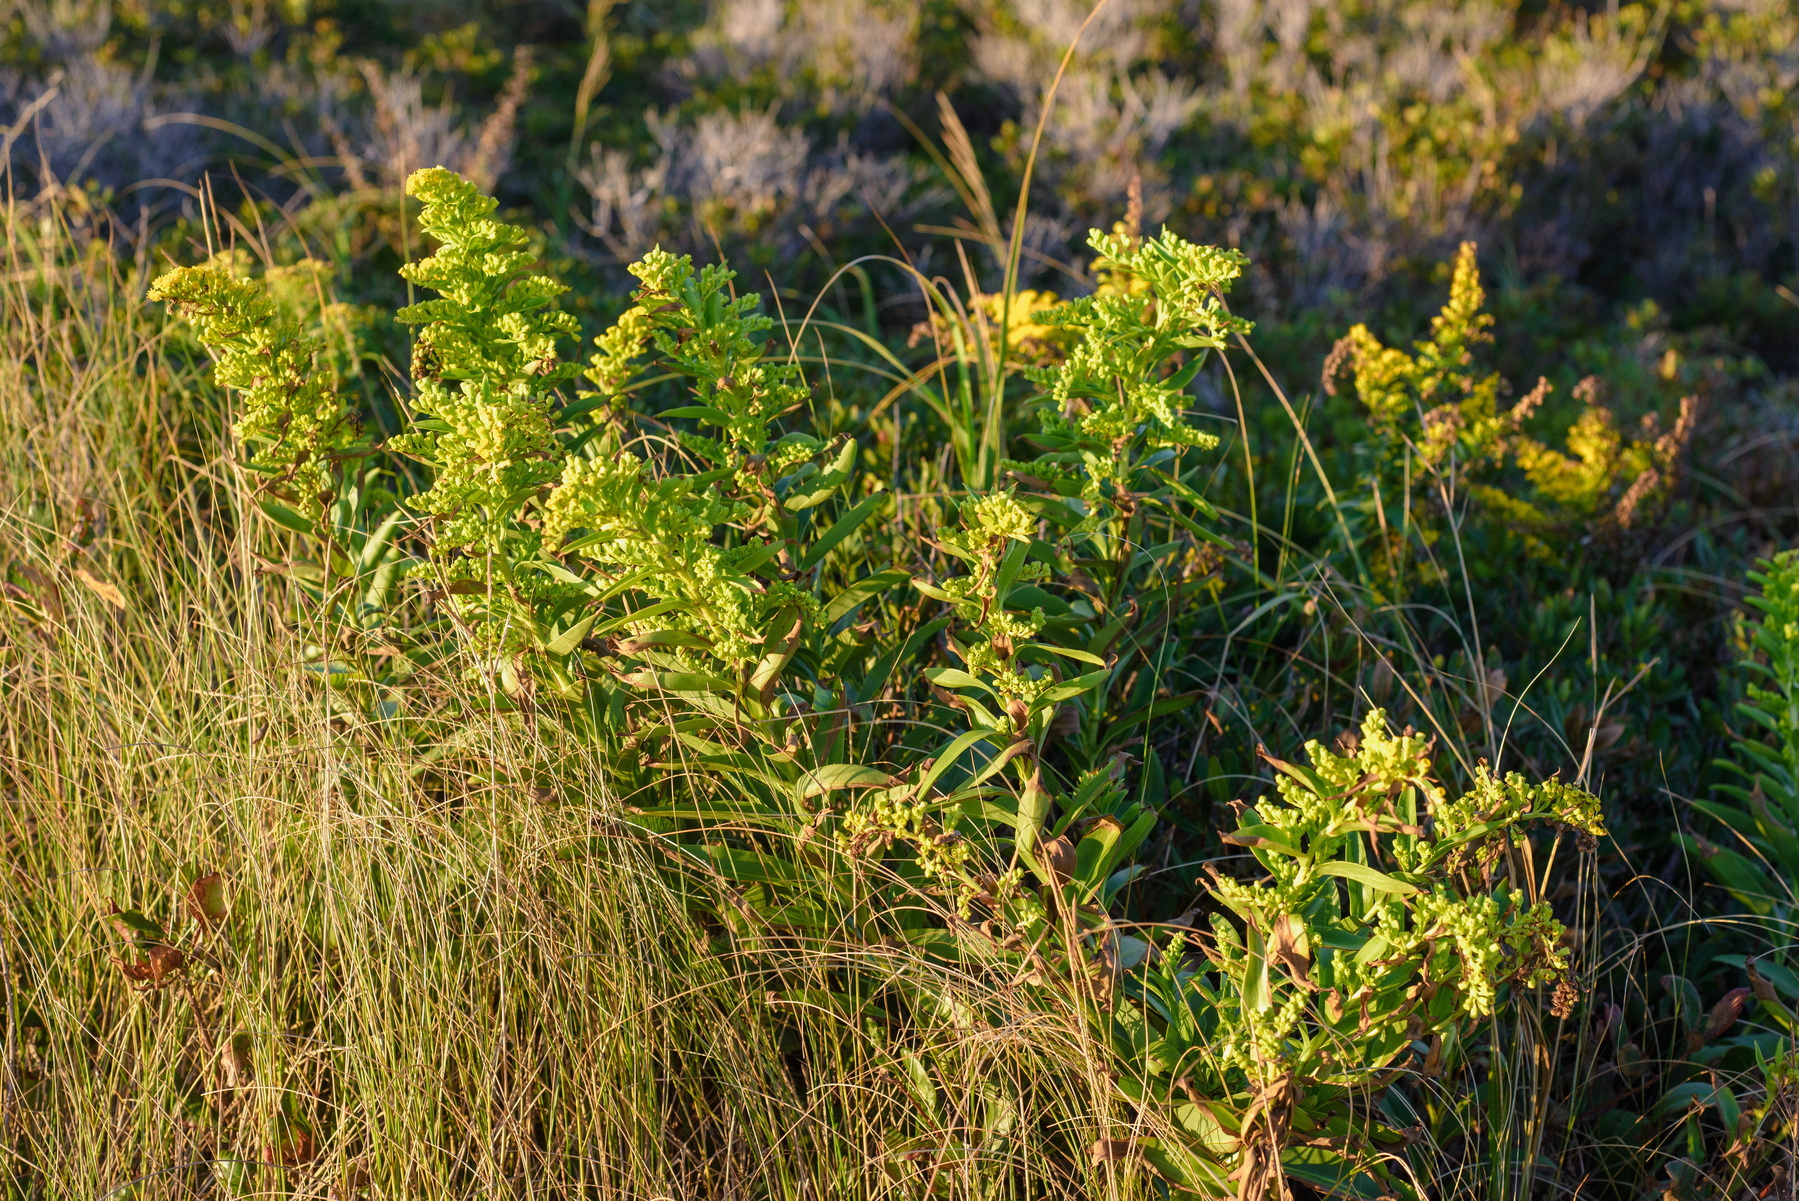 Goldenrod plants at sunrise.